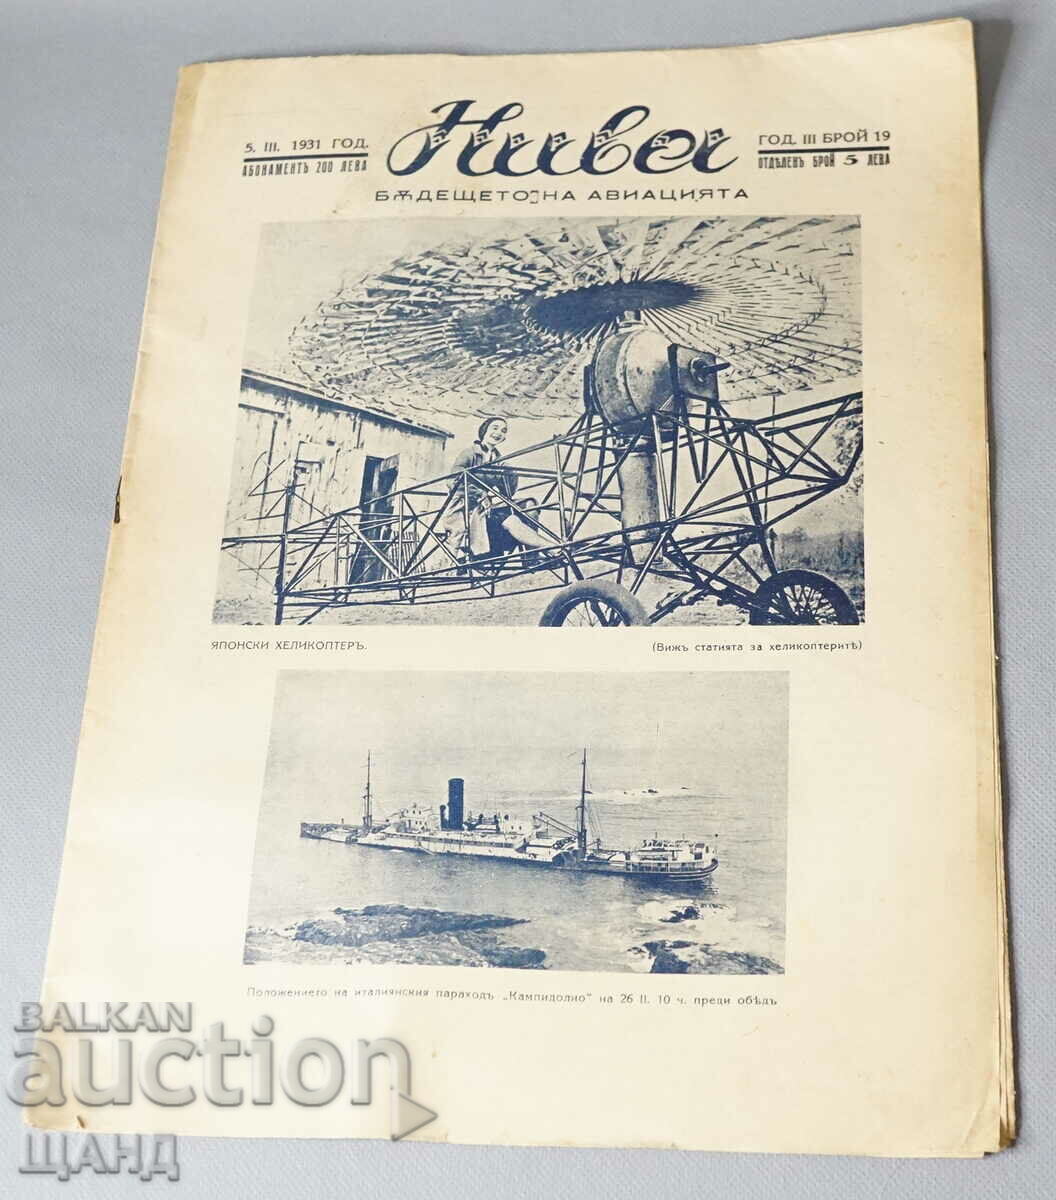 1931 Bulgaria Niva magazine issue 19 The Future of Aviation